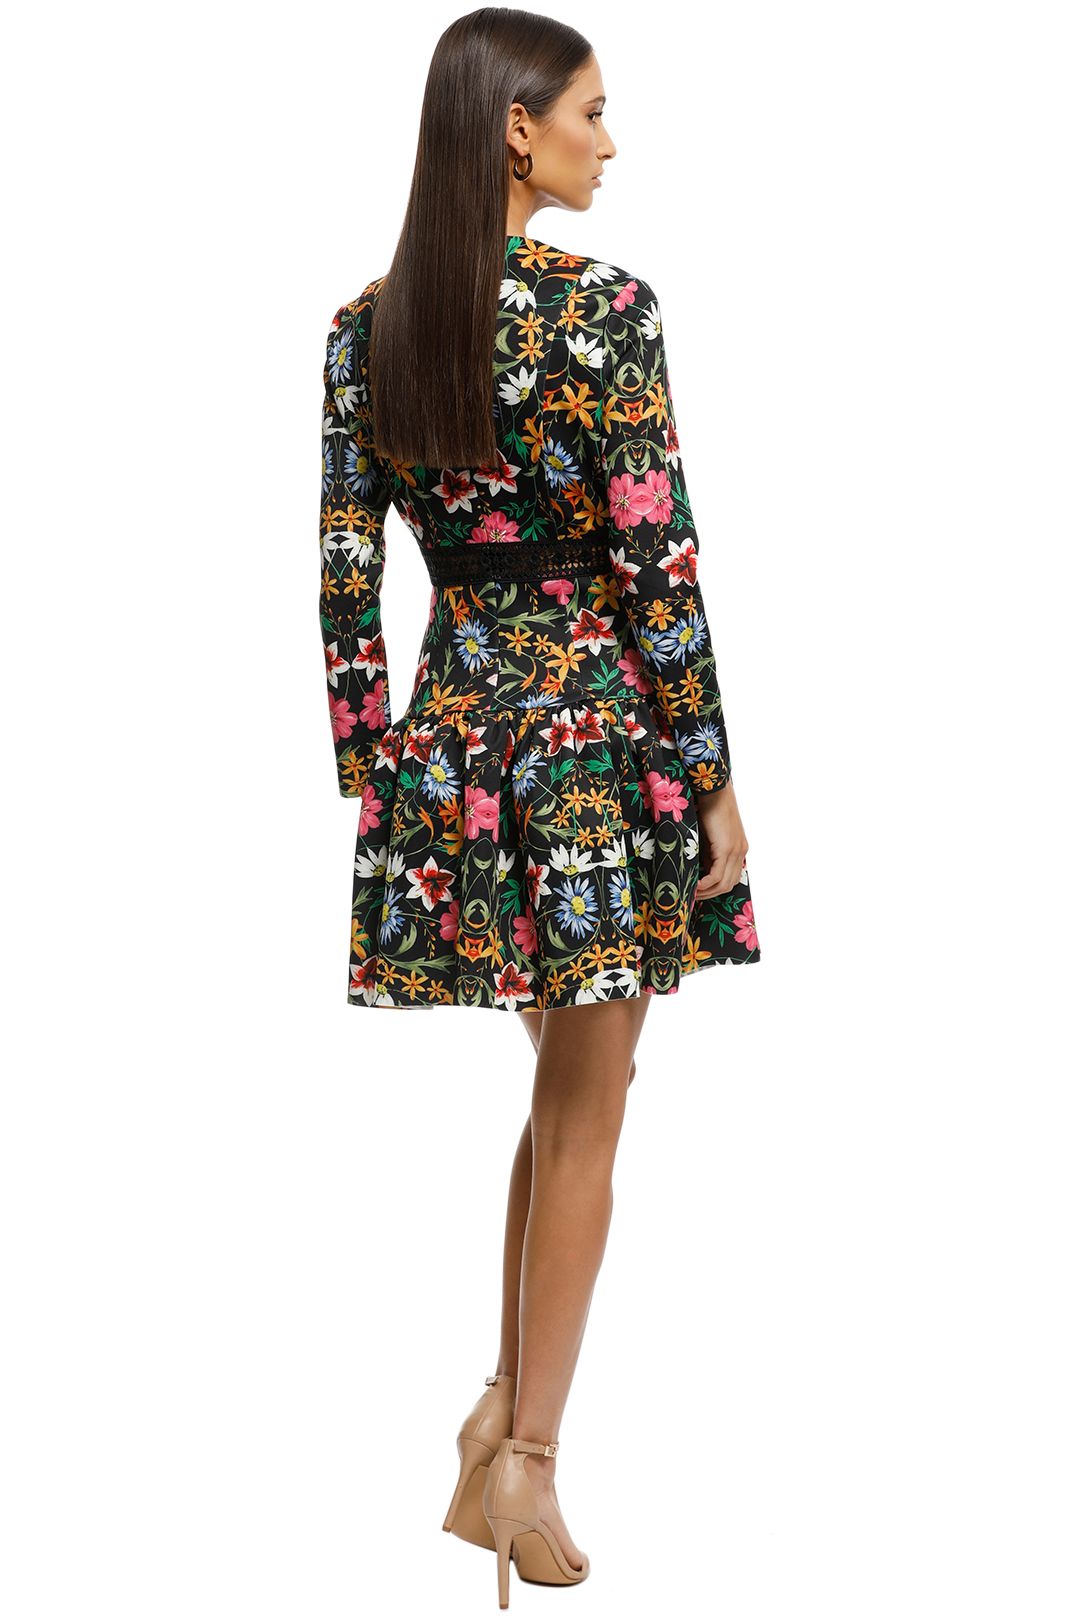 Alexia-Admor-Long-Sleeve-Lace-Knit-Trim-Floral-Print-Dress-Black-Multi-Back